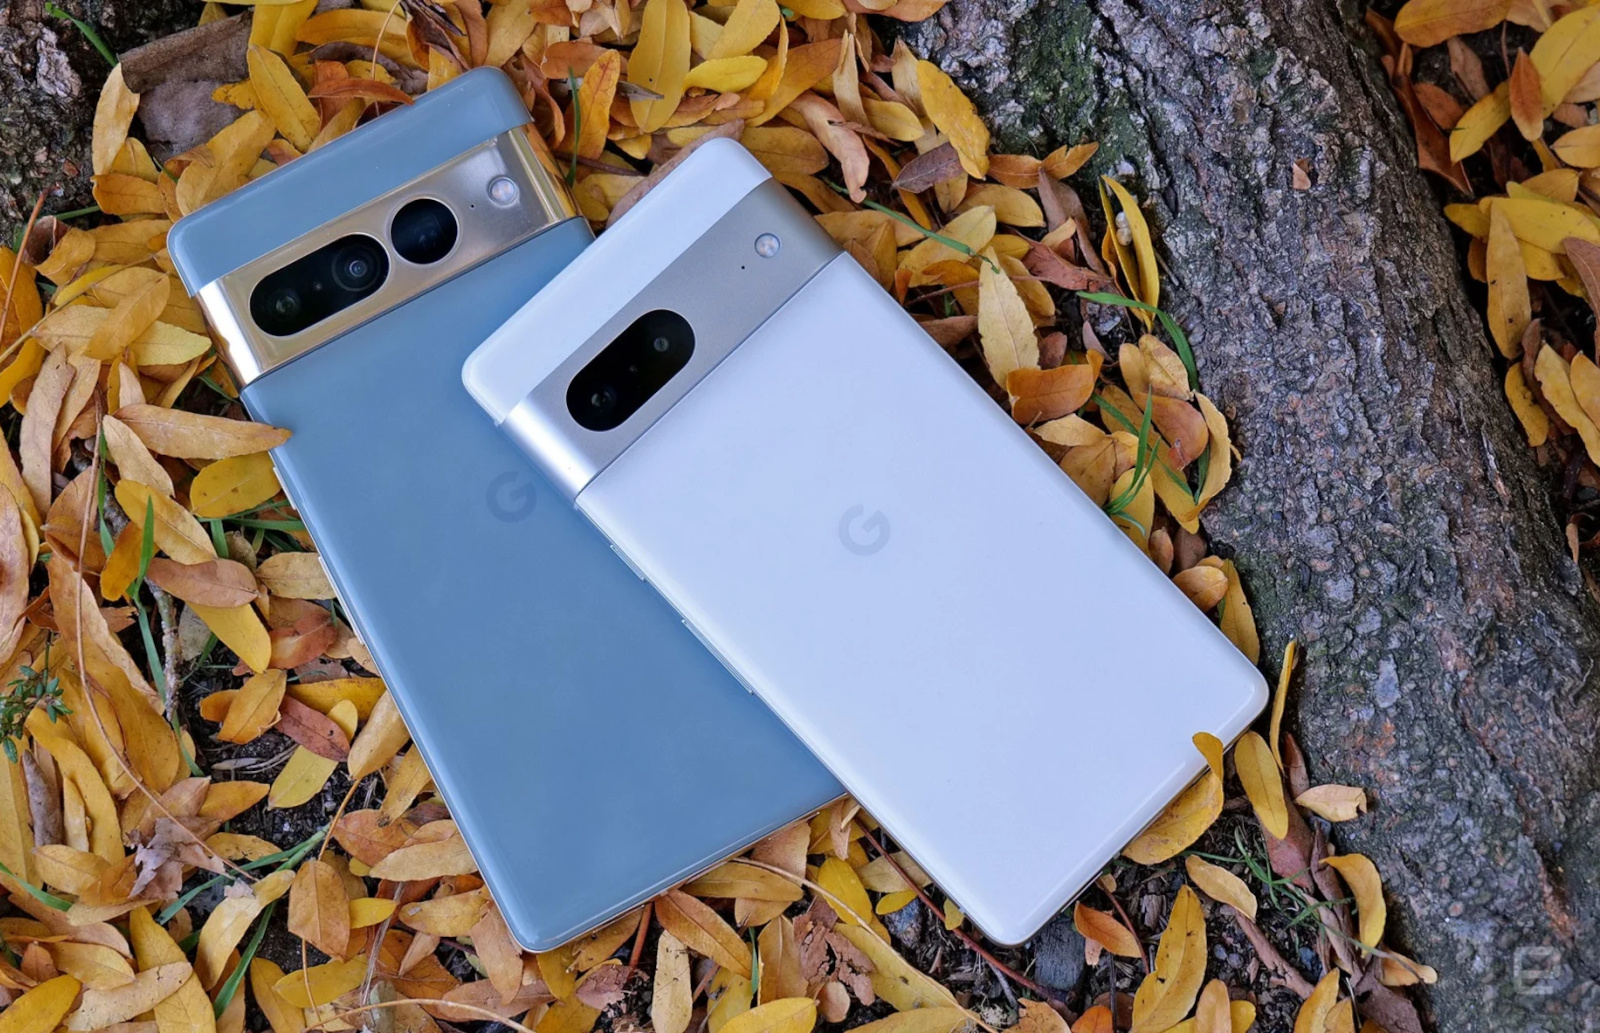 Google brings spatial audio to Pixel 7 and Pixel 6
phones